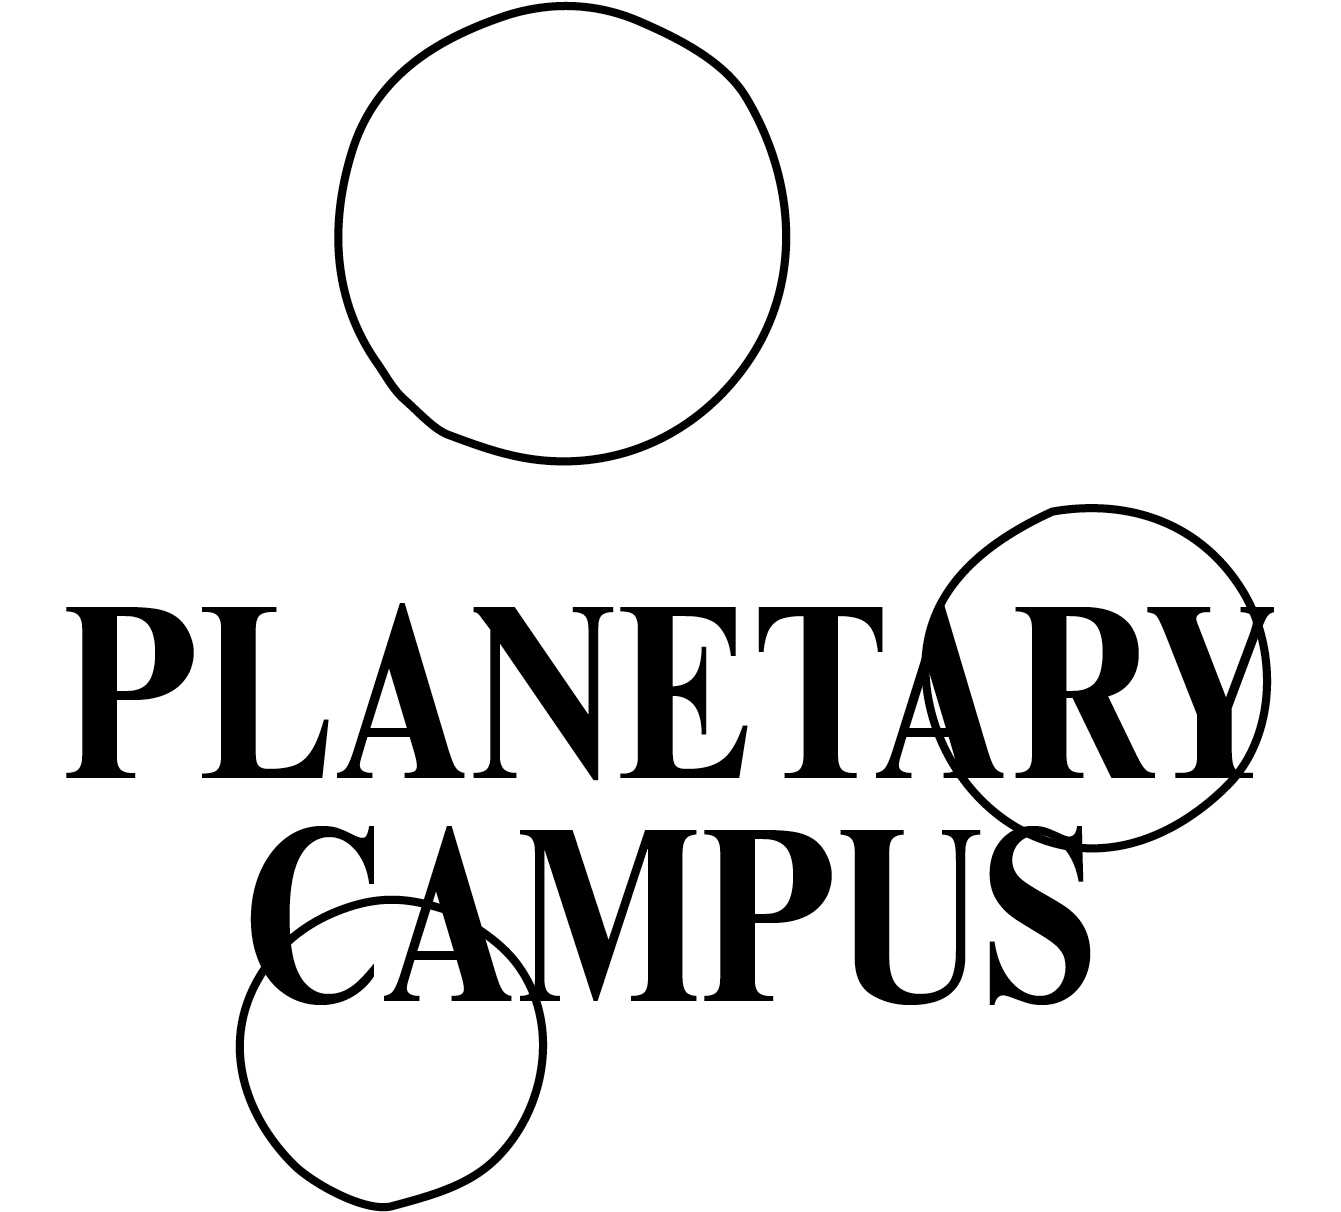 Planetary Campus (logo)